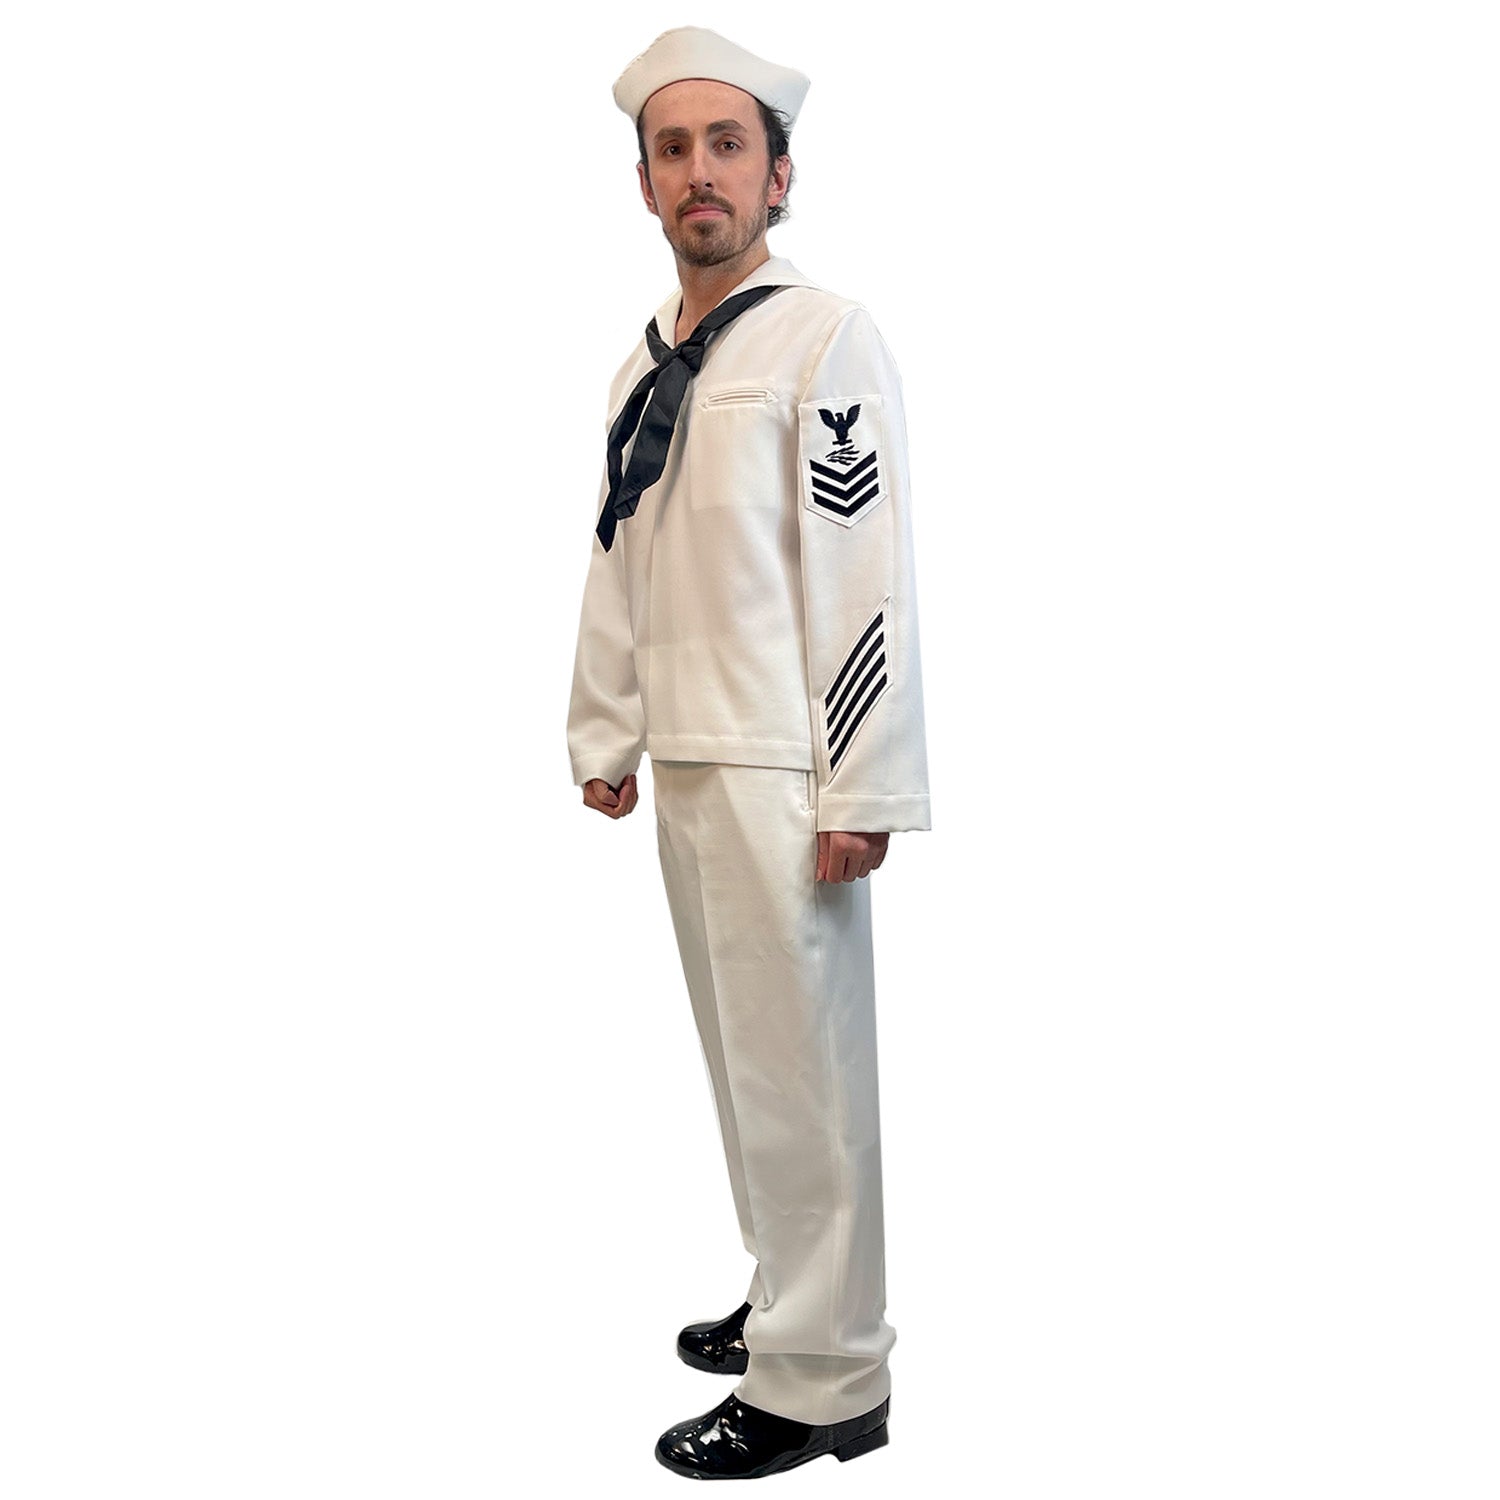 Stage Quality USN Navy White Cracker Jack Adult Uniform Costume